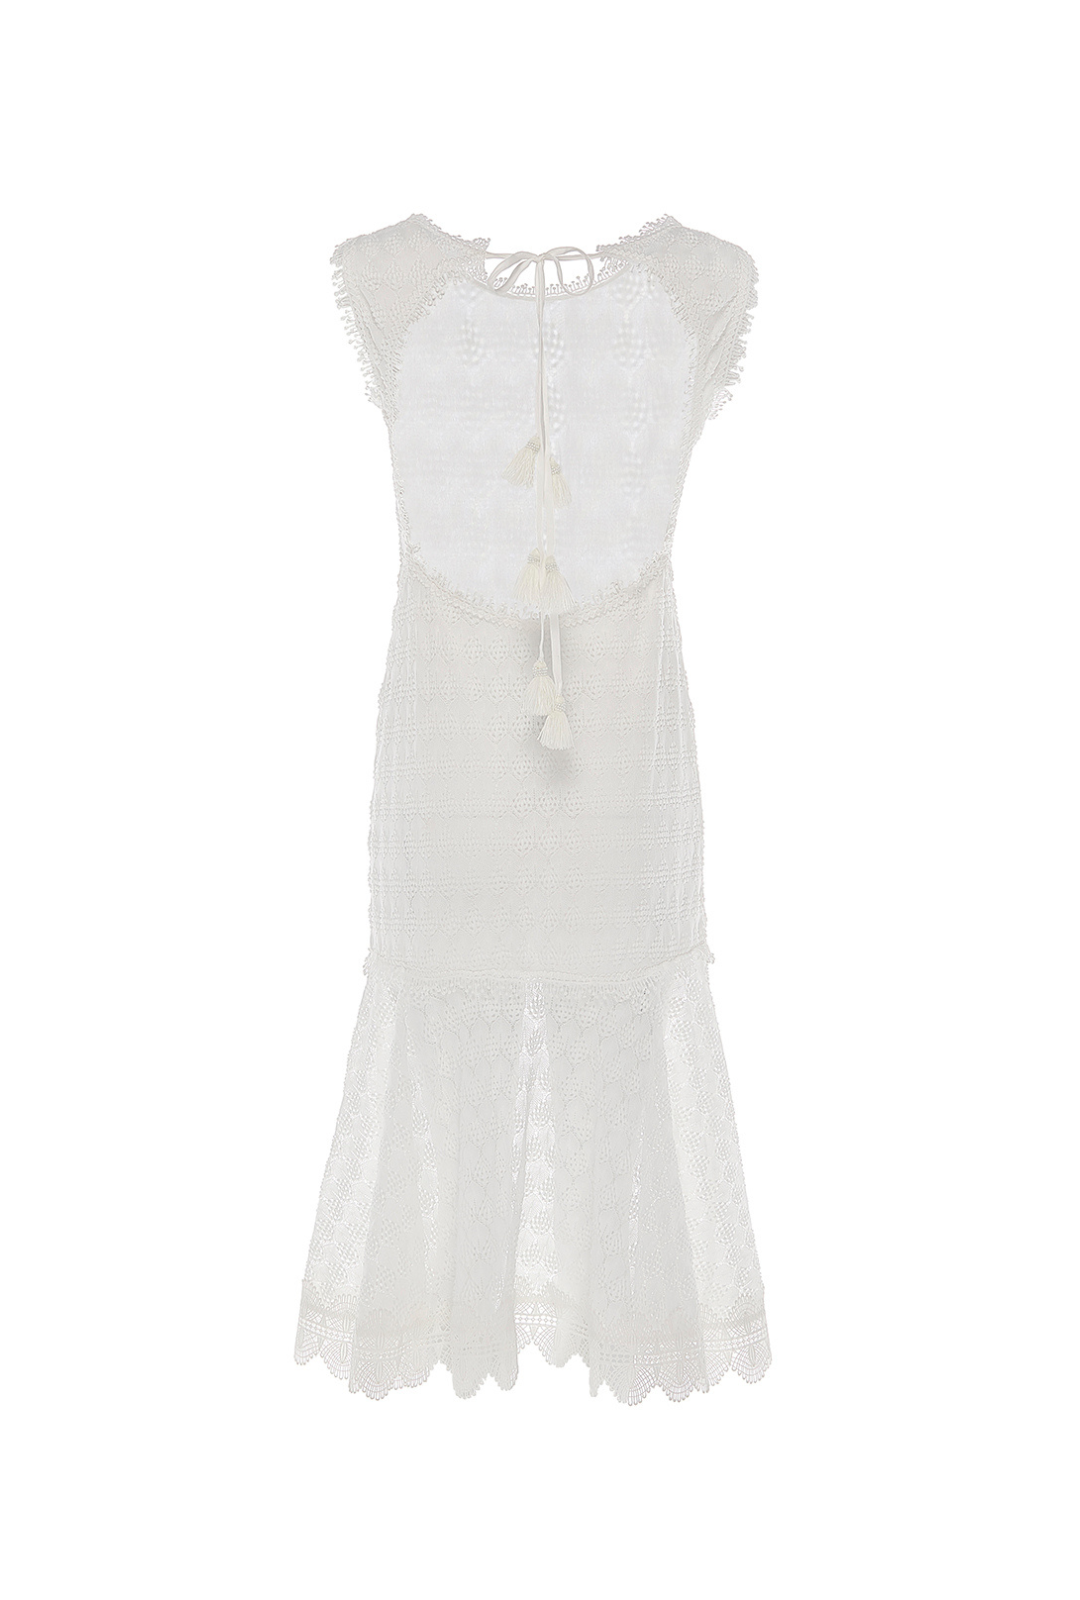 waimari-lluvia-dress-white